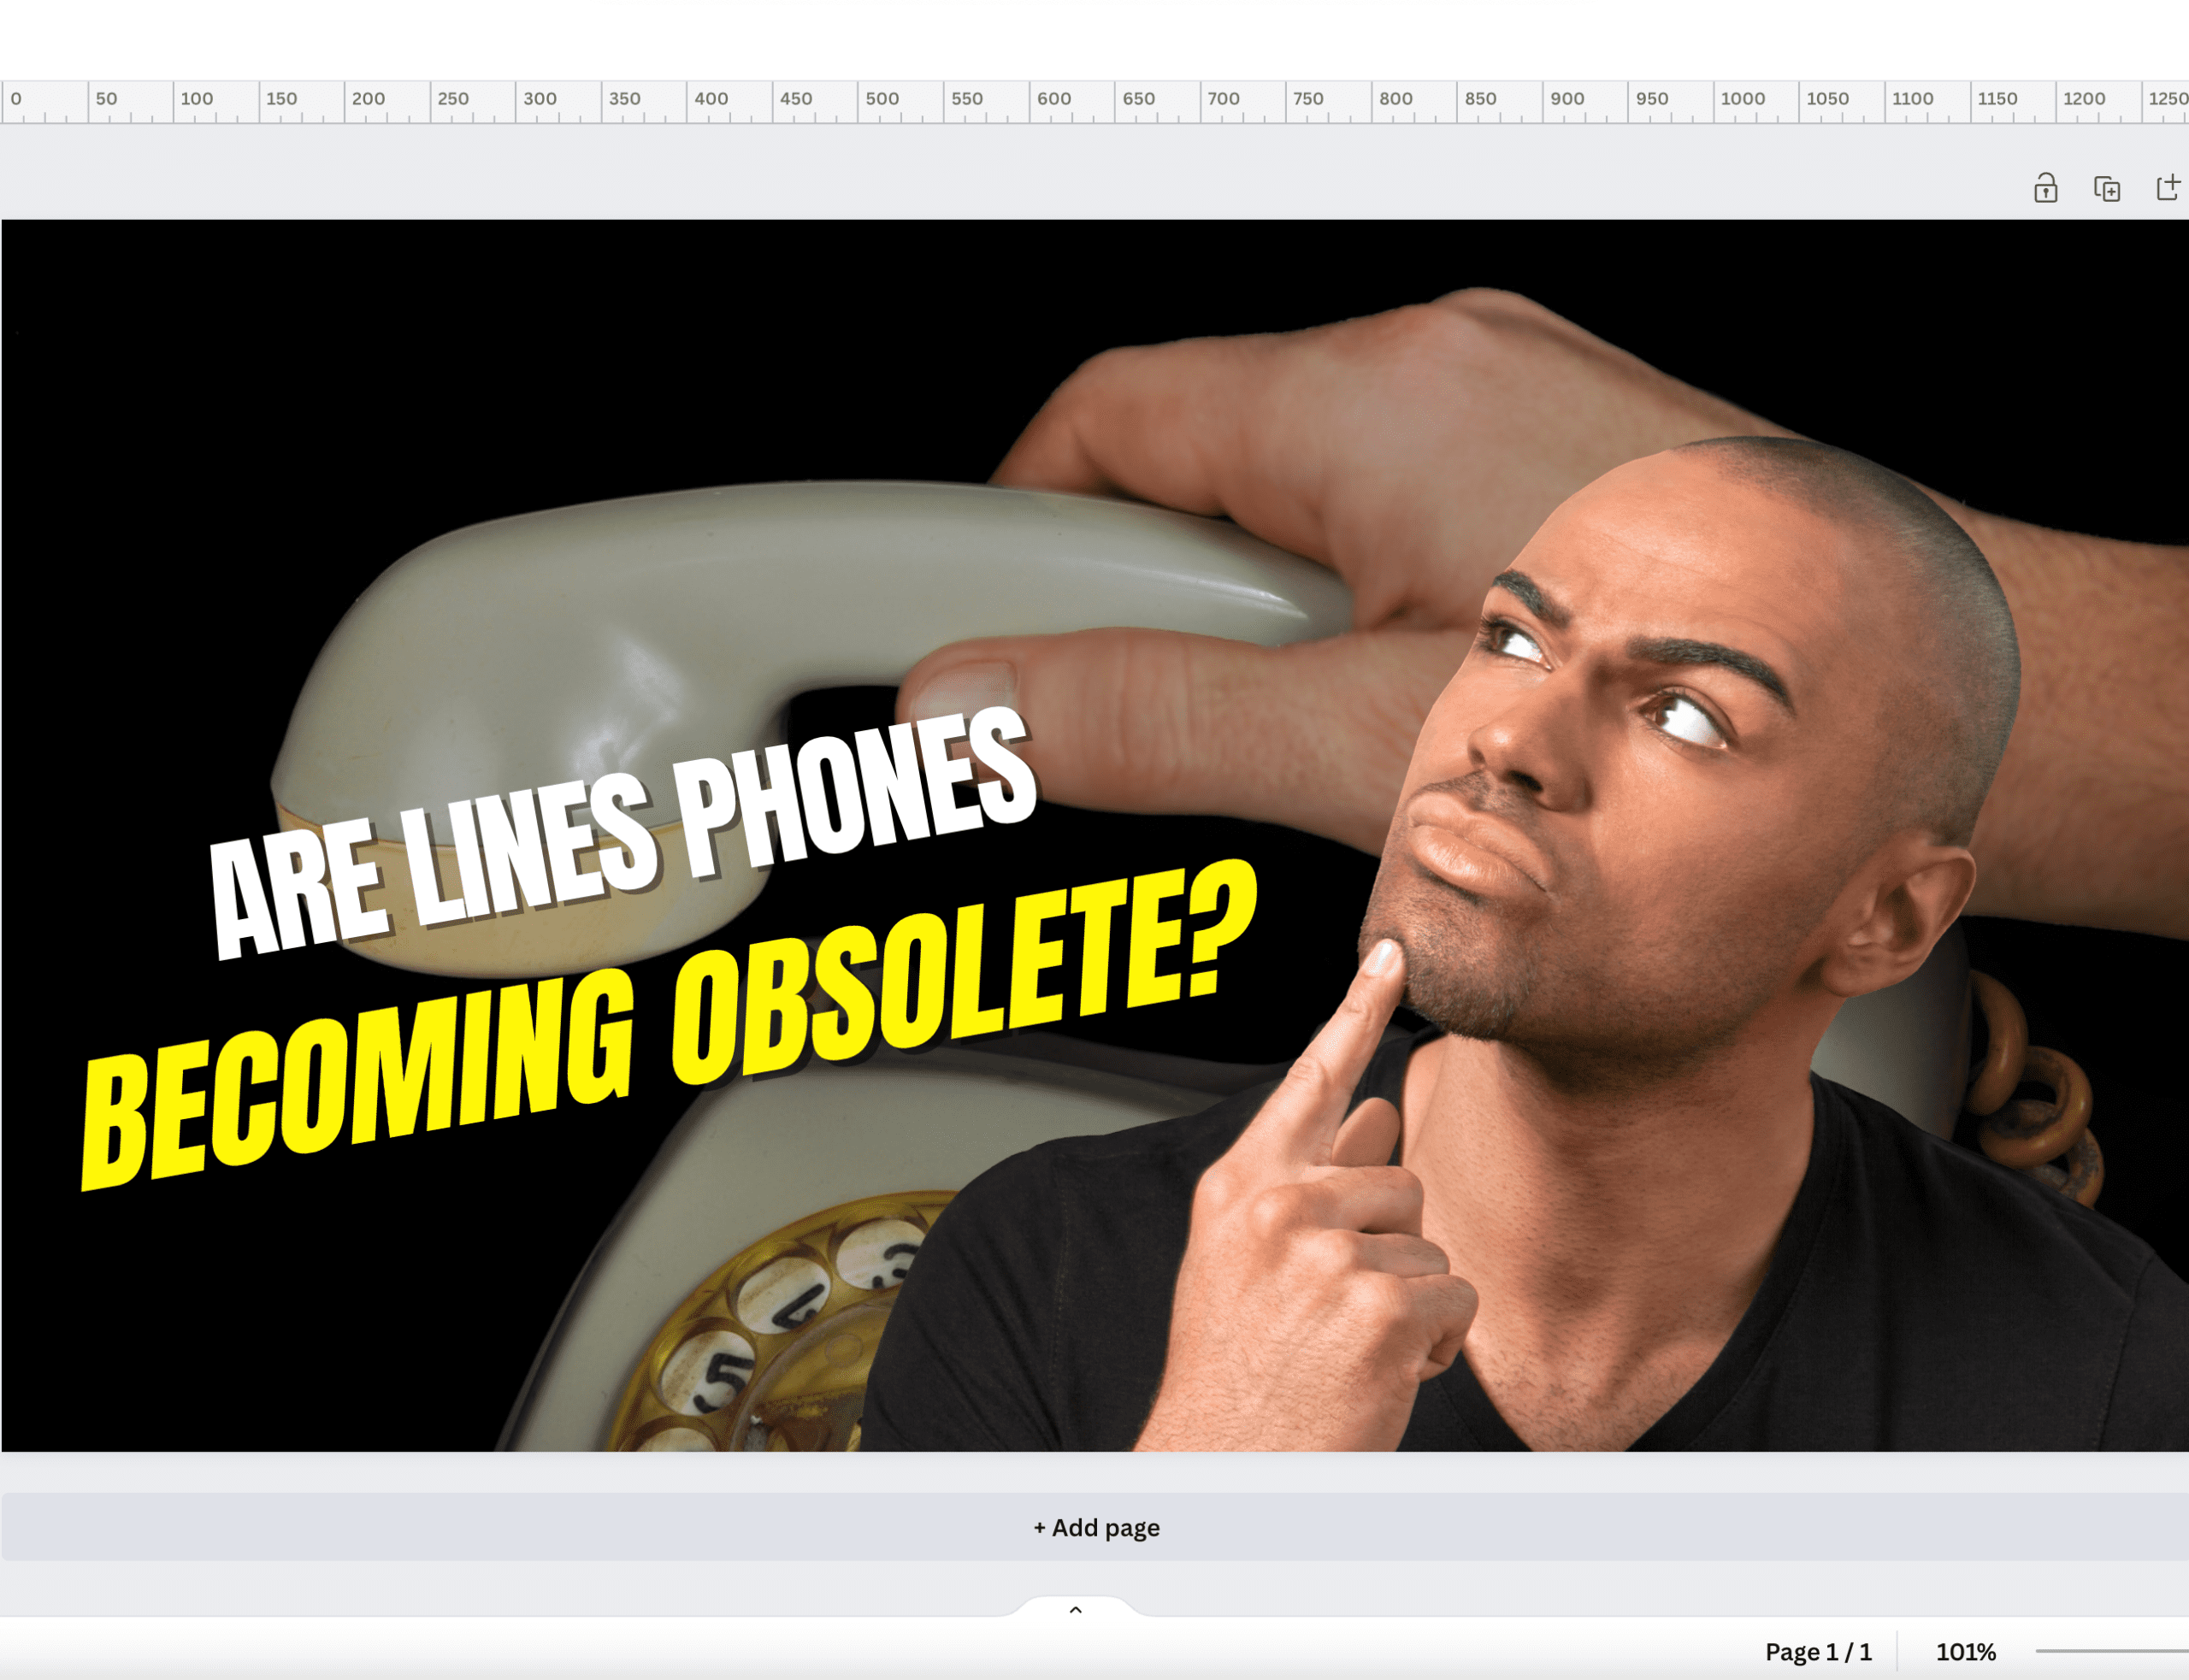 Are Landline Phones becoming obsolete?